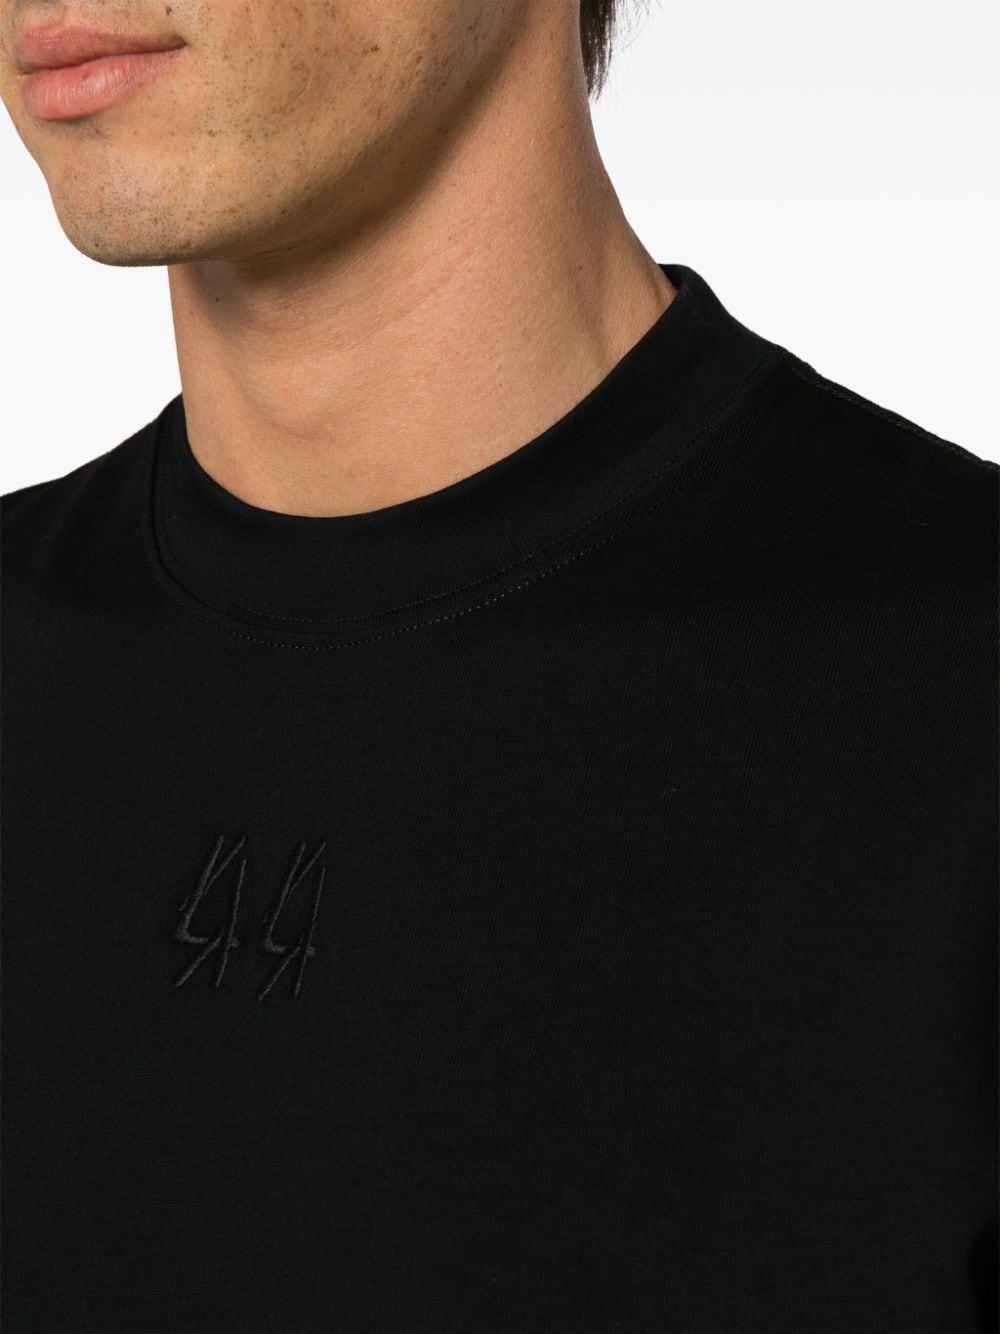 Black t-shirt with white logo